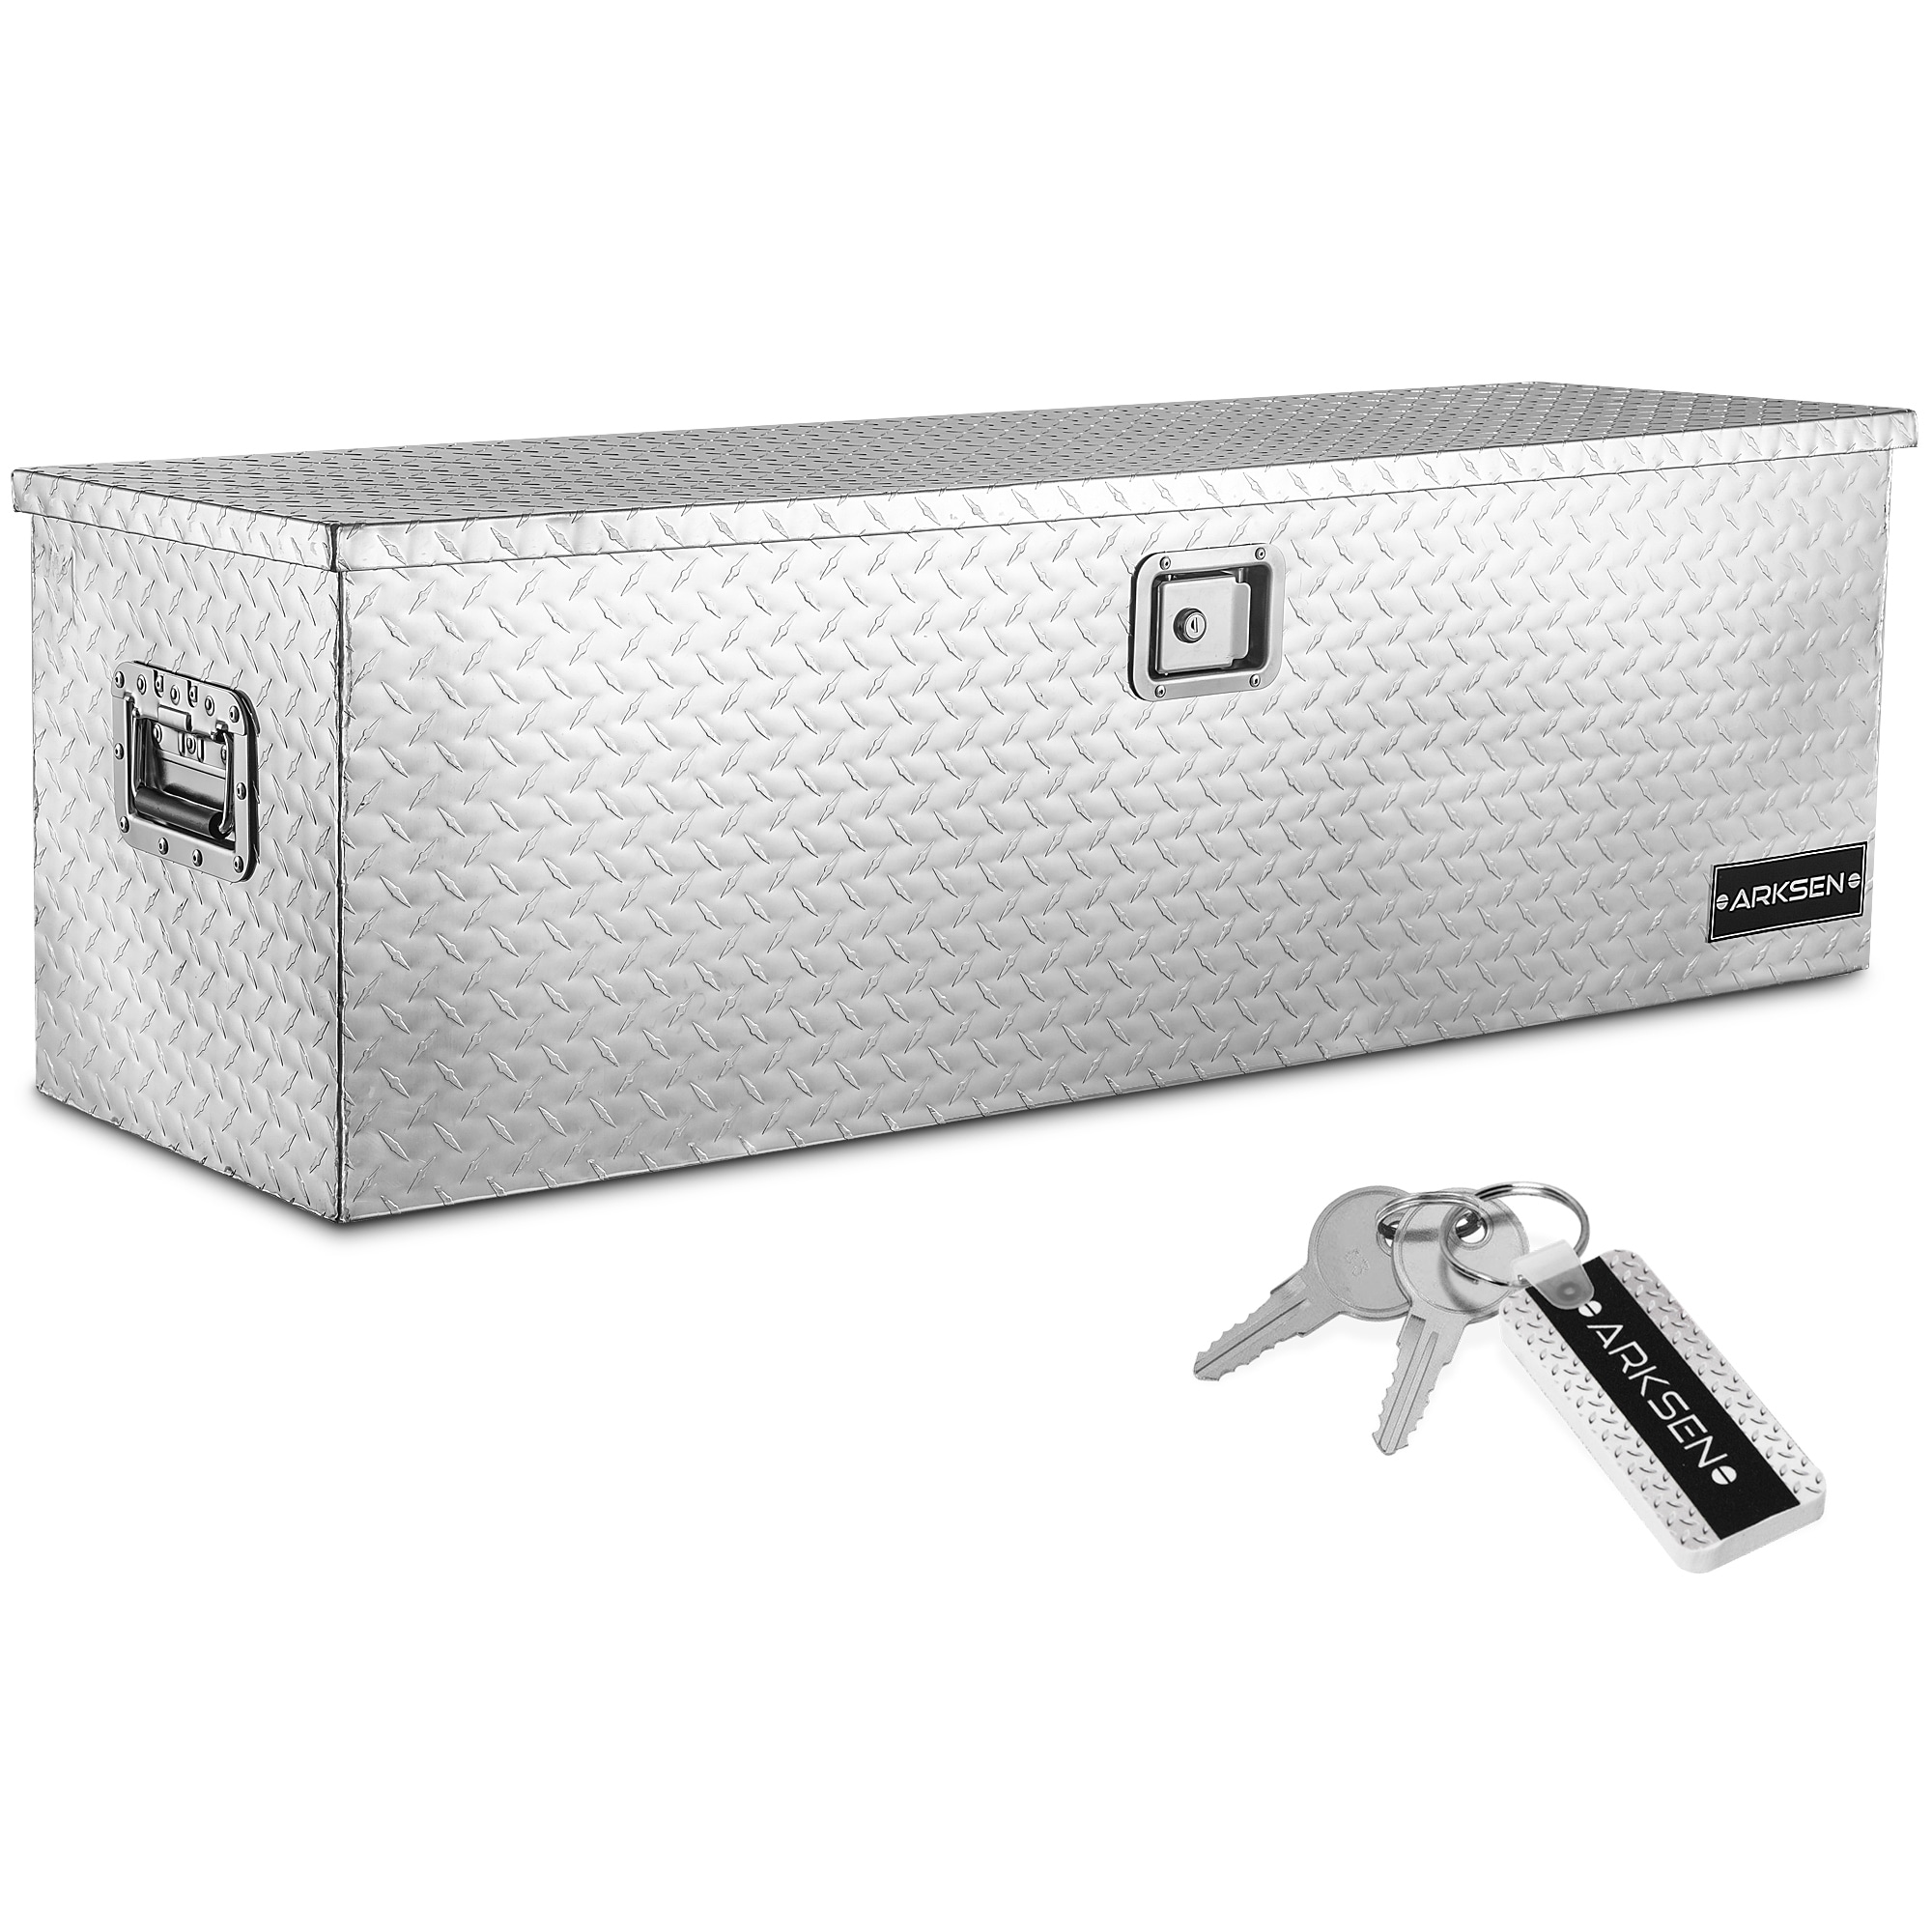 Fits 49" Tool Box Heavy Duty Aluminum Pickup Trailer Storage Underbody+Handle